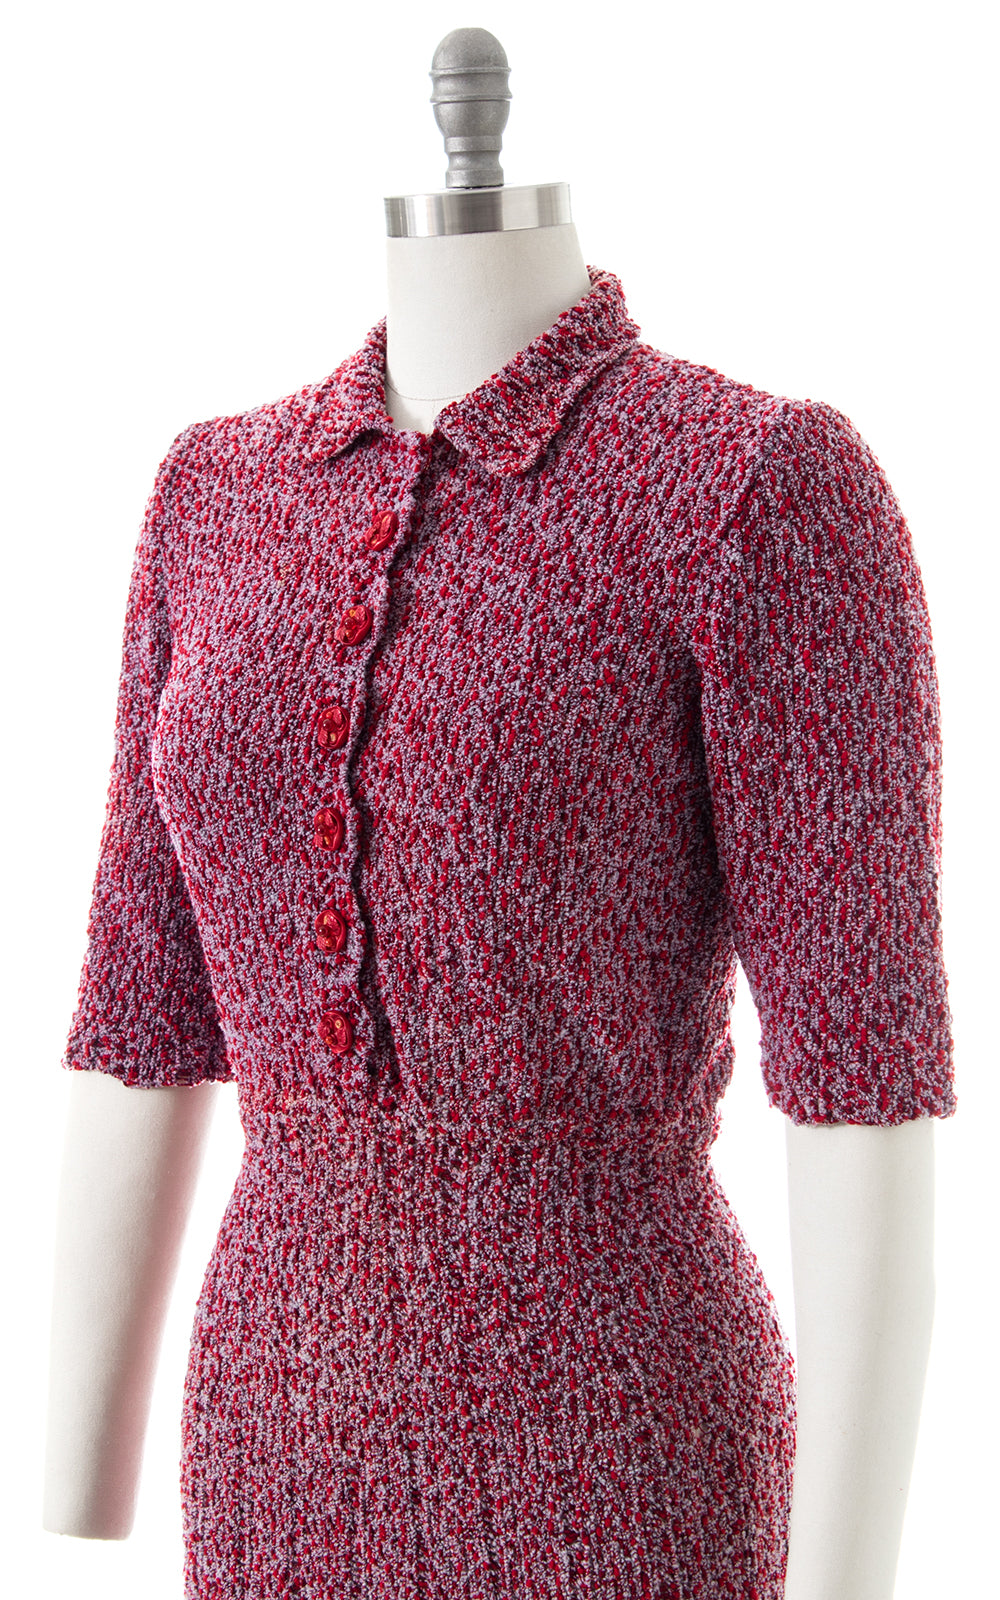 1940s Two Tone Flecked Knit Wool Dress